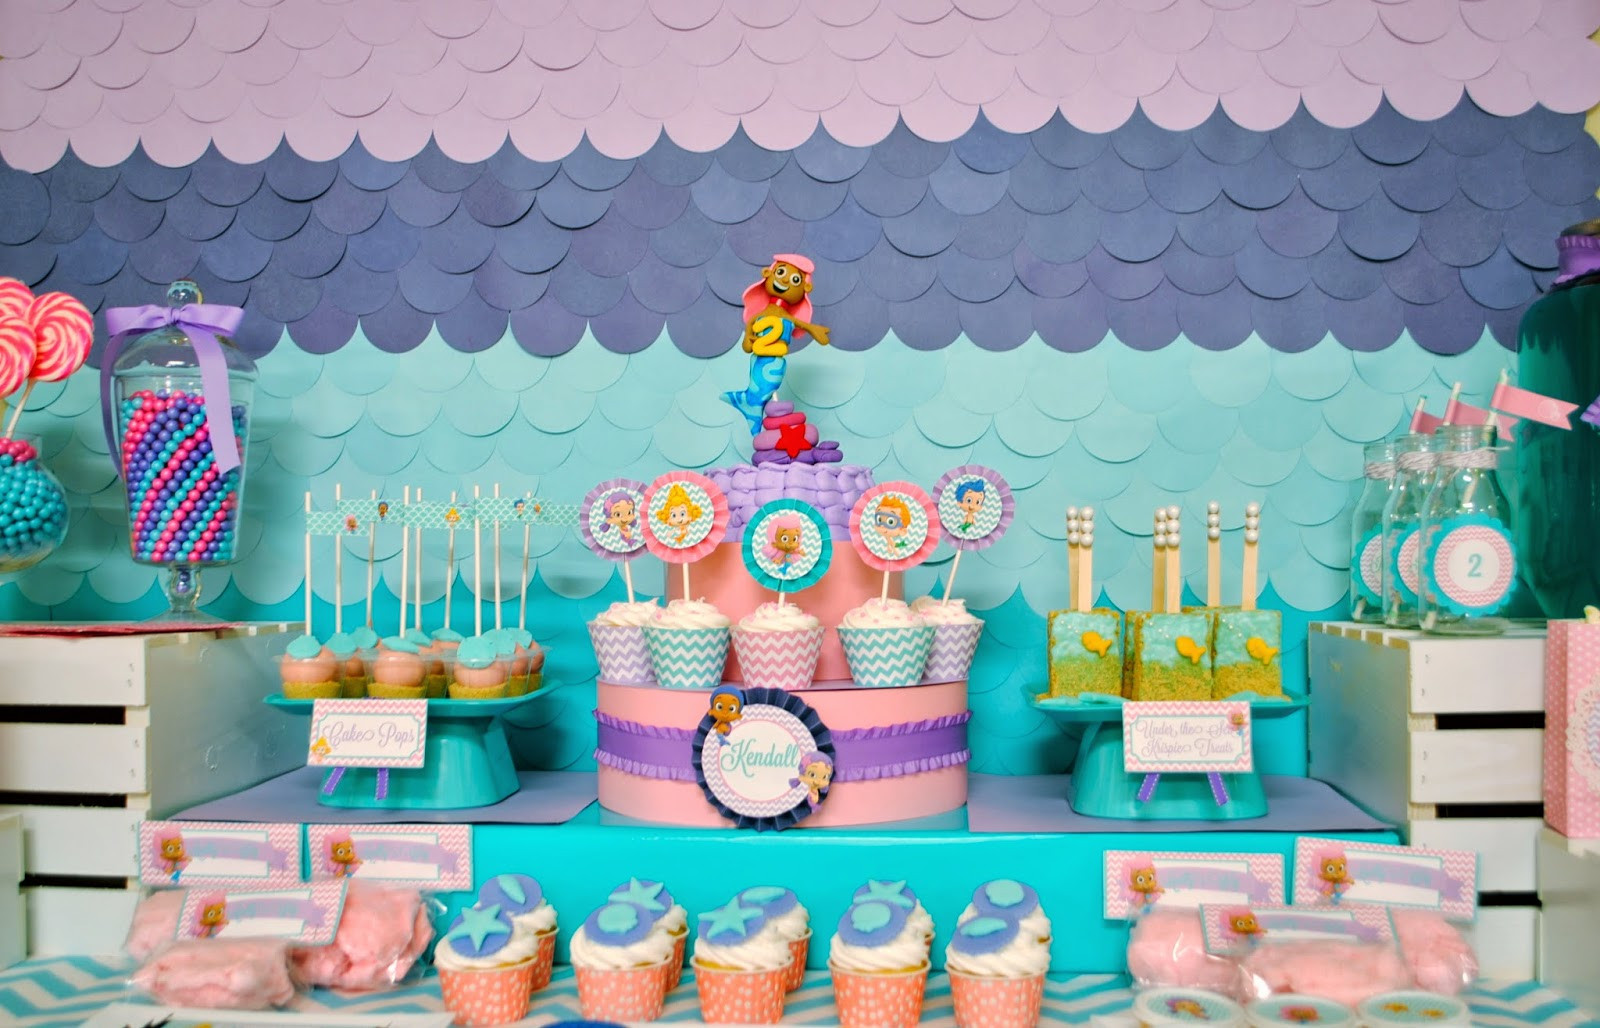 Bubble Guppies Birthday Party Decorations
 Karo s Fun Land Bubble Guppies 2nd Birthday Party